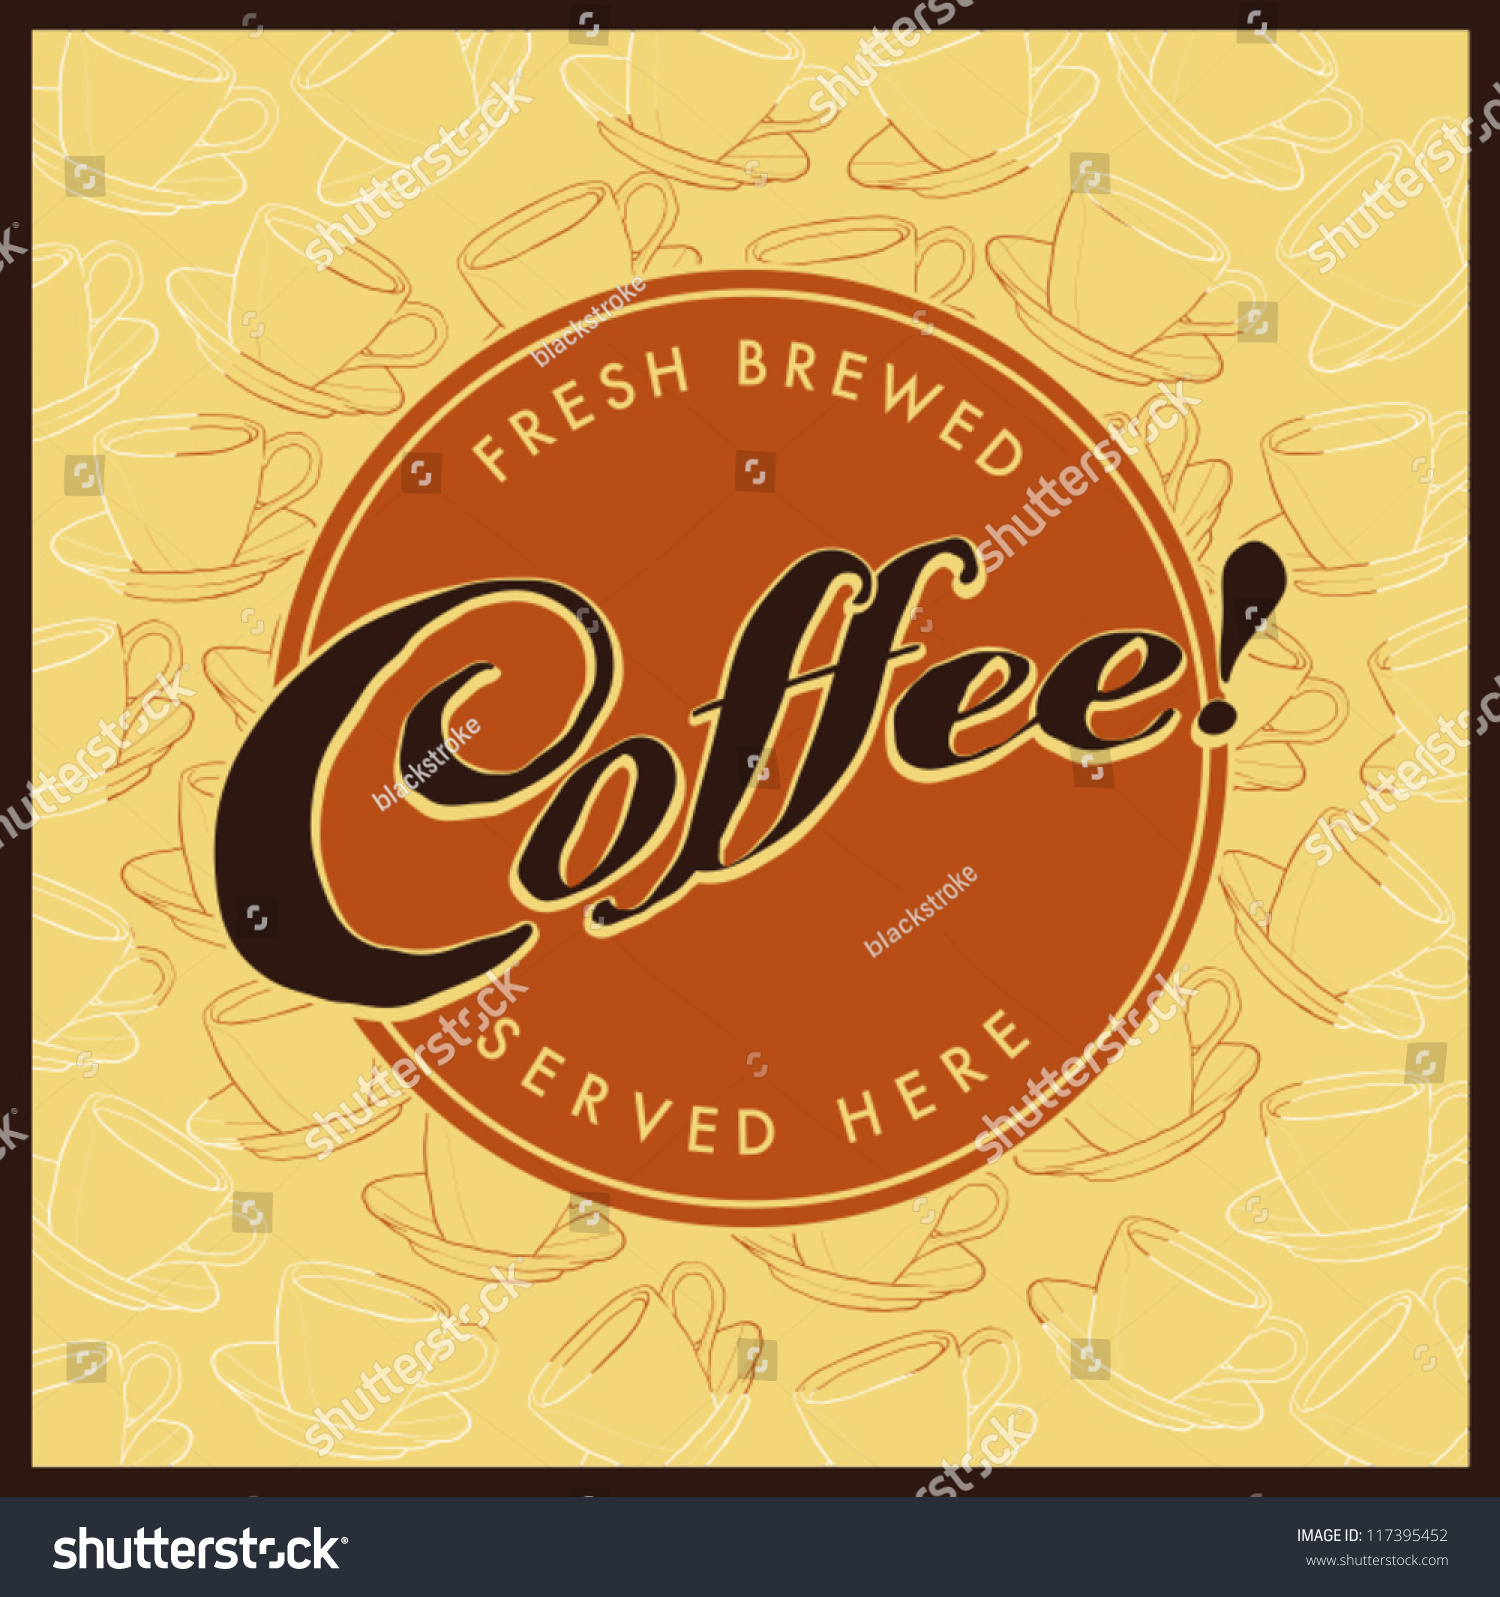 Fresh Brewed Coffee Stock Vector 117395452 - Shutterstock